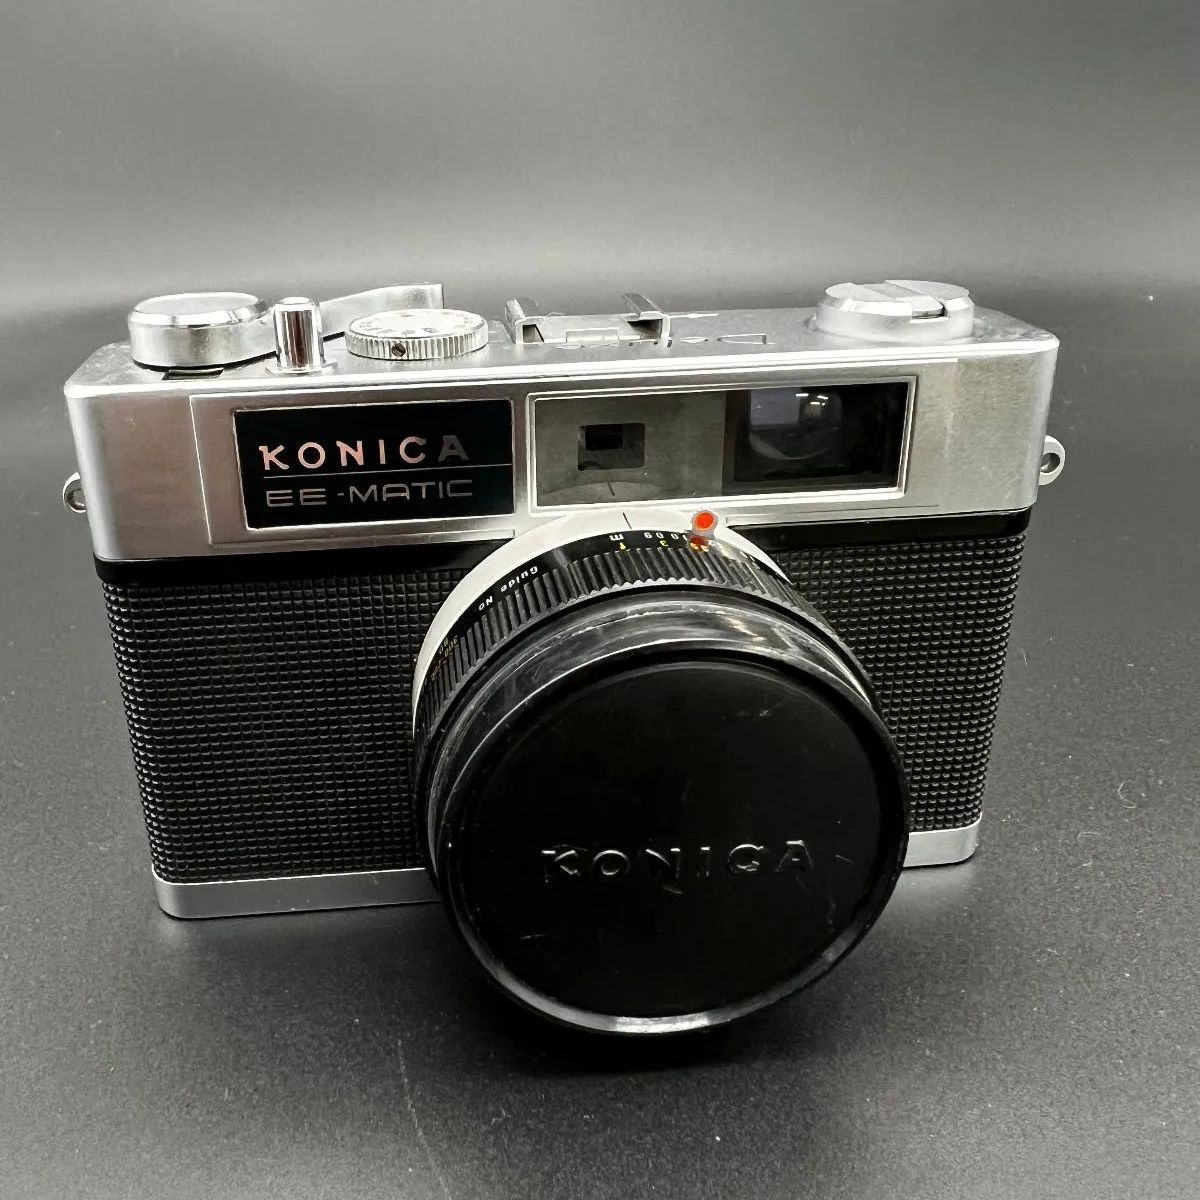 KONICA コニカ フィルムカメラ EE-MATIC Deluxe - フィルムカメラ